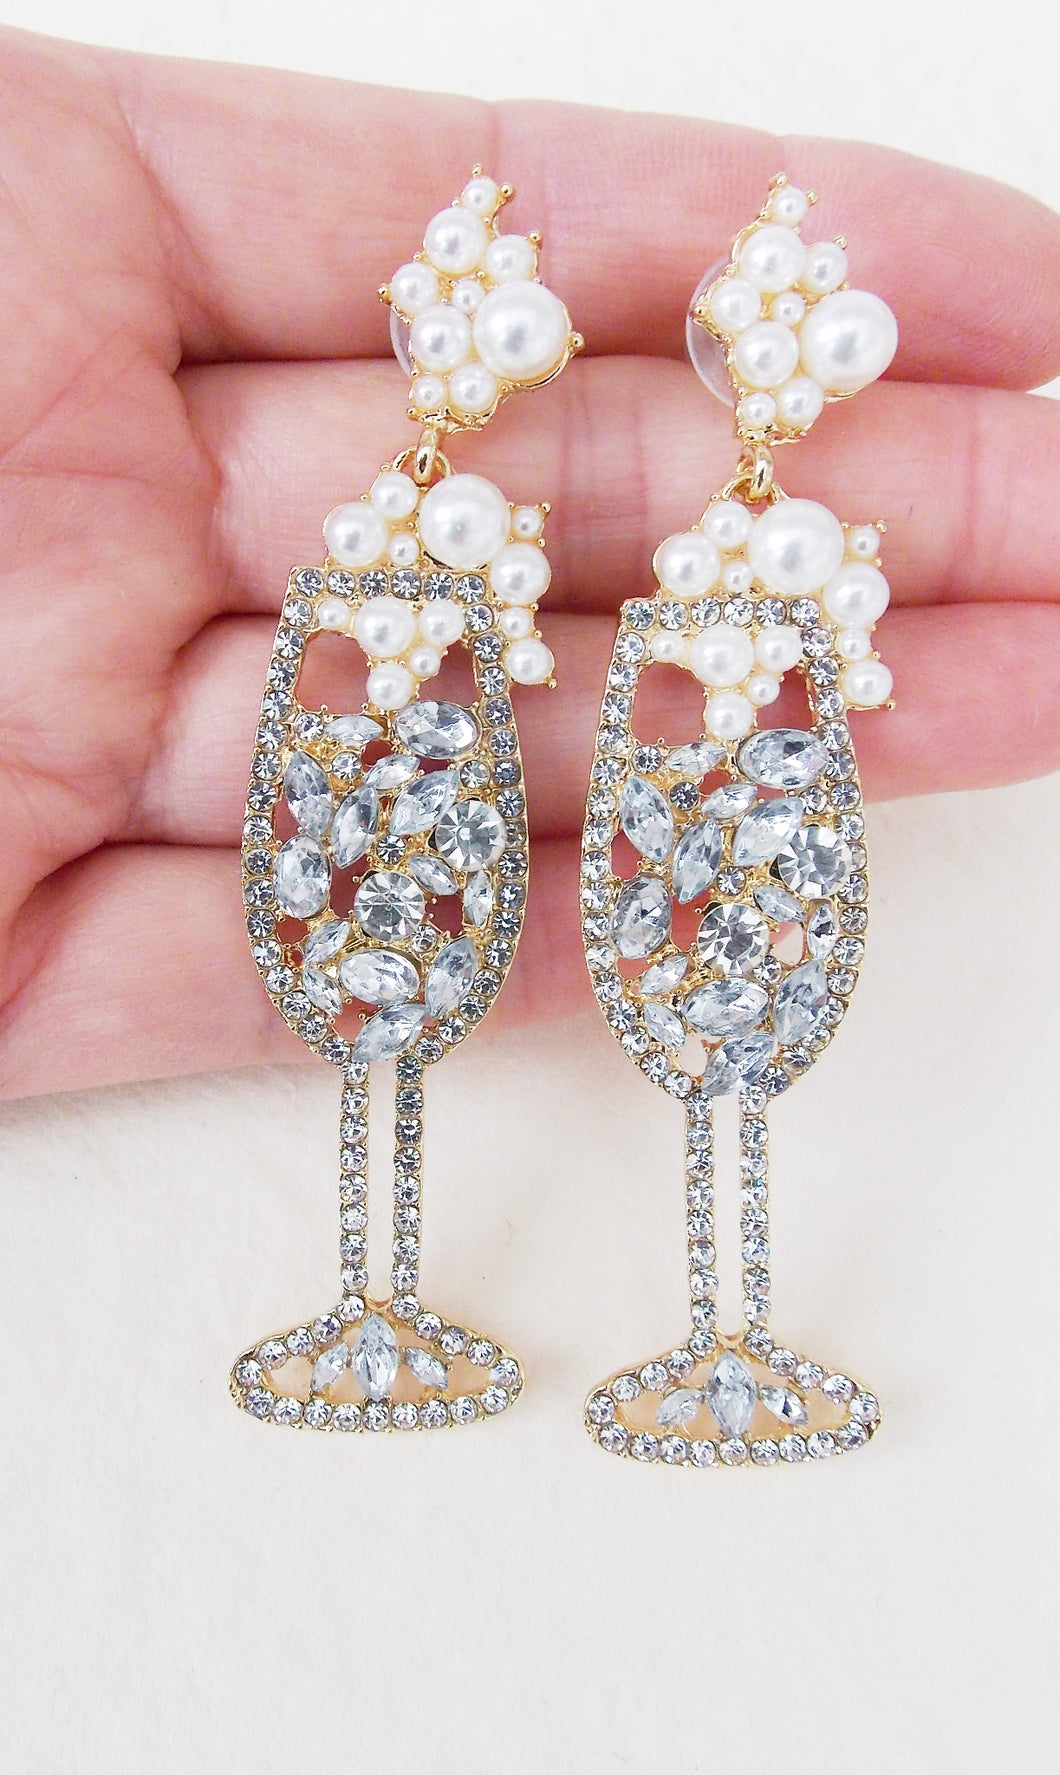 Buy MultiColor Glass Pearl Earrings For Women and Girls Fancy Drop And  Dangler Earrings SNEH SHOP at Amazon.in